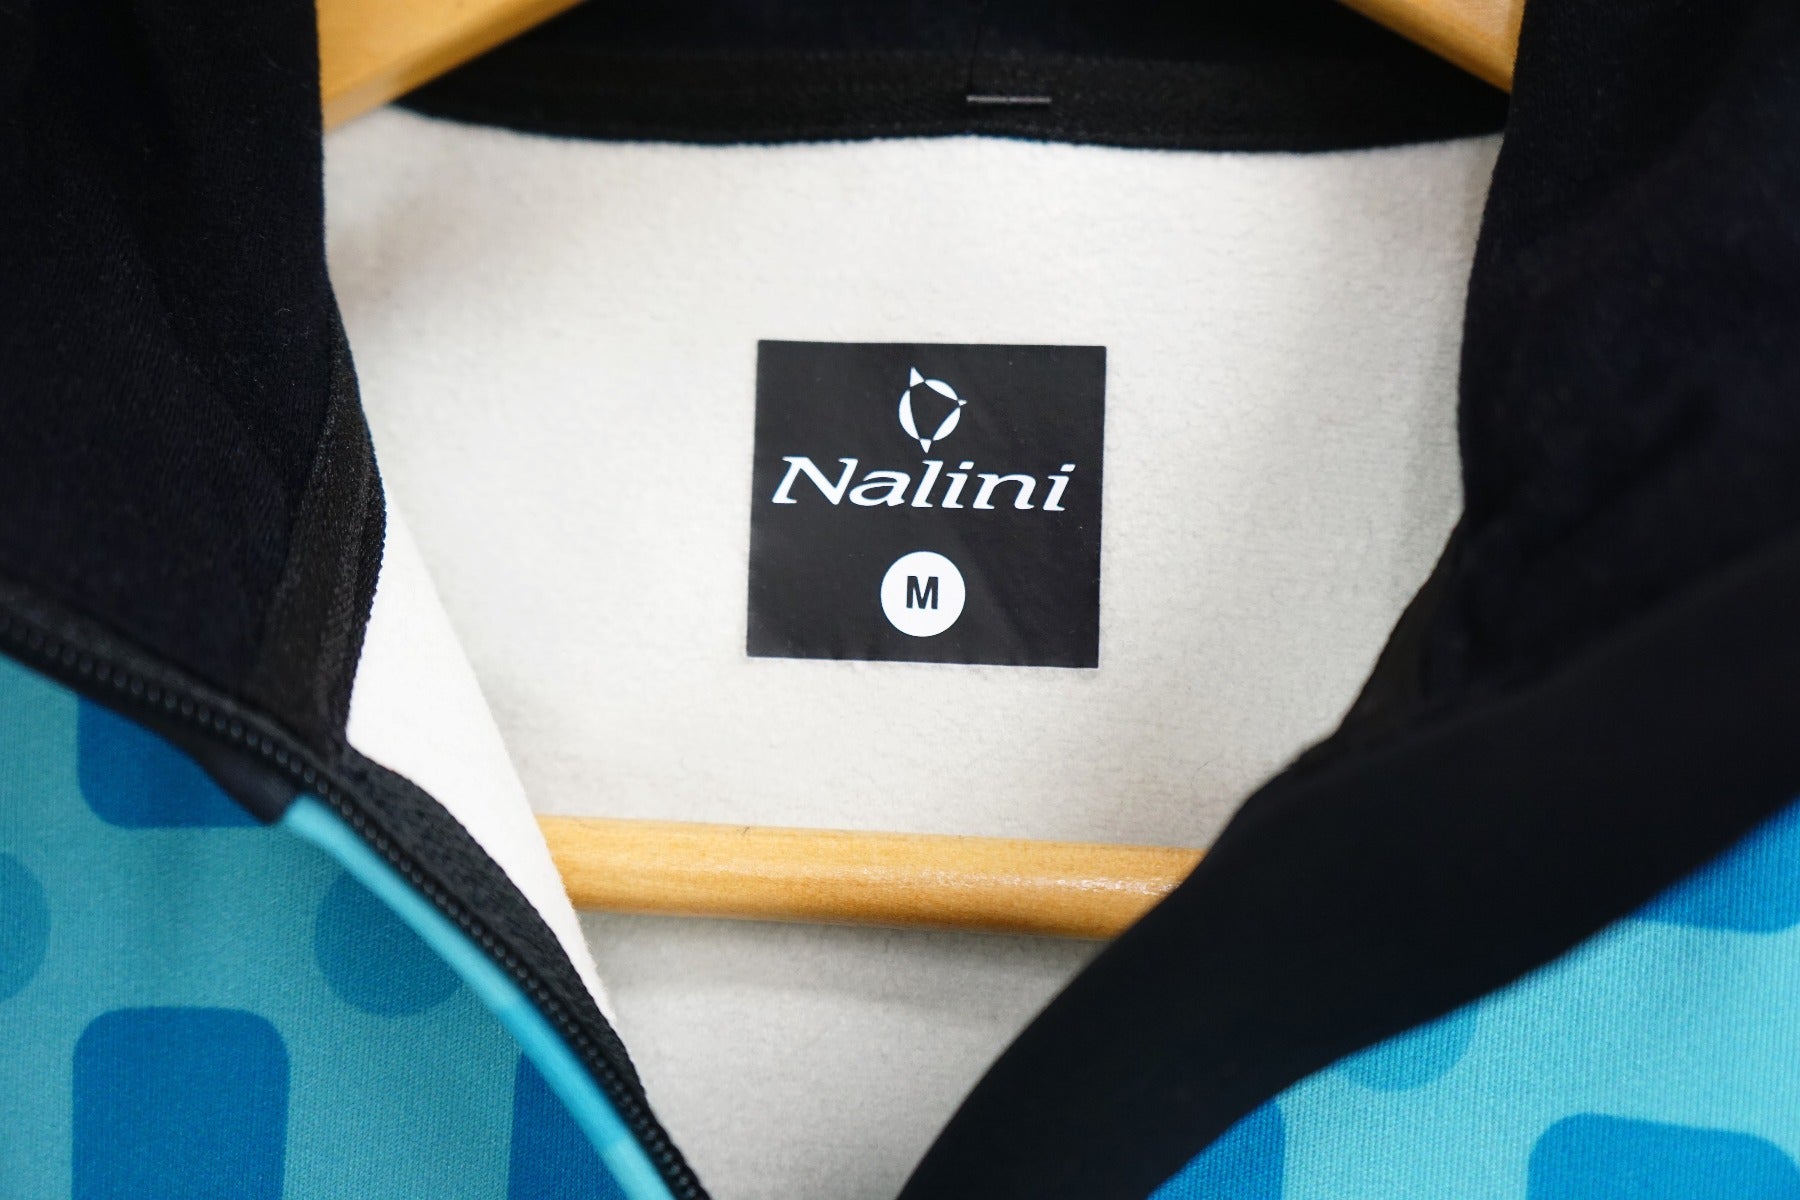 NALINI 「ナリー二」 AIW WS LADY JKT 2.0 BLUE ジャケット